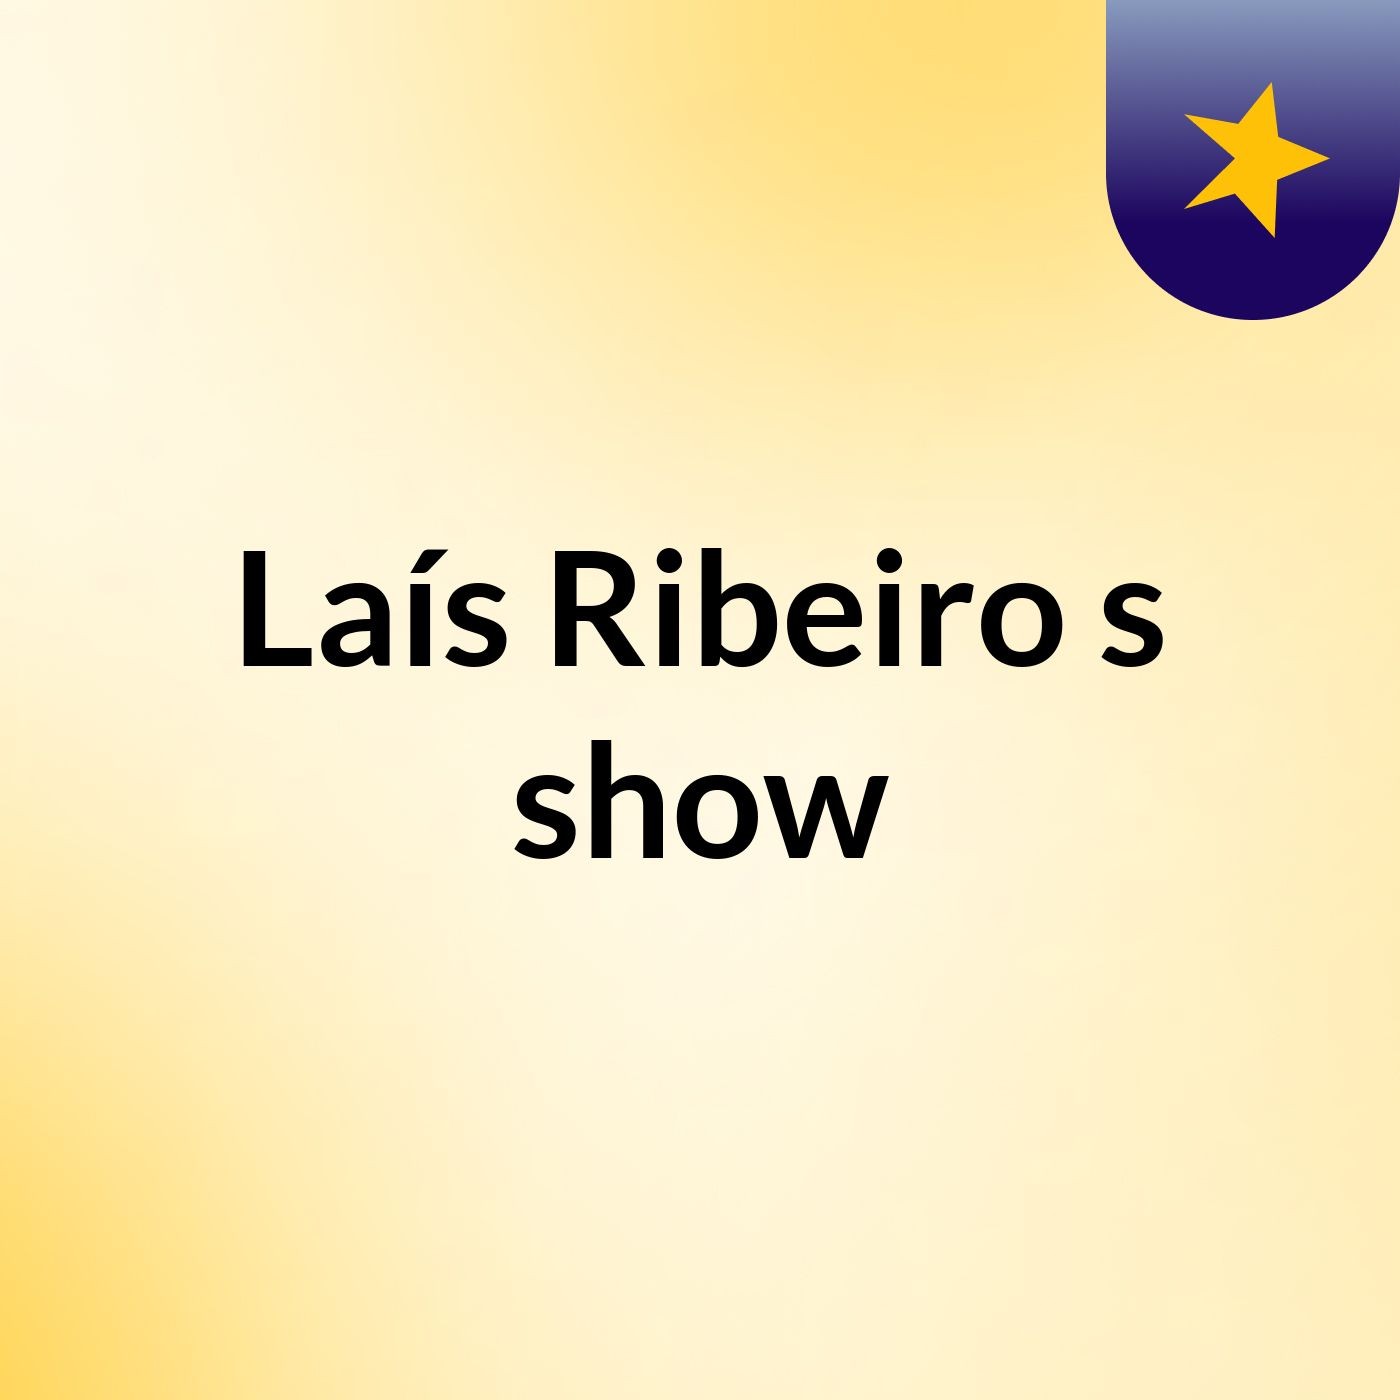 Laís Ribeiro's show